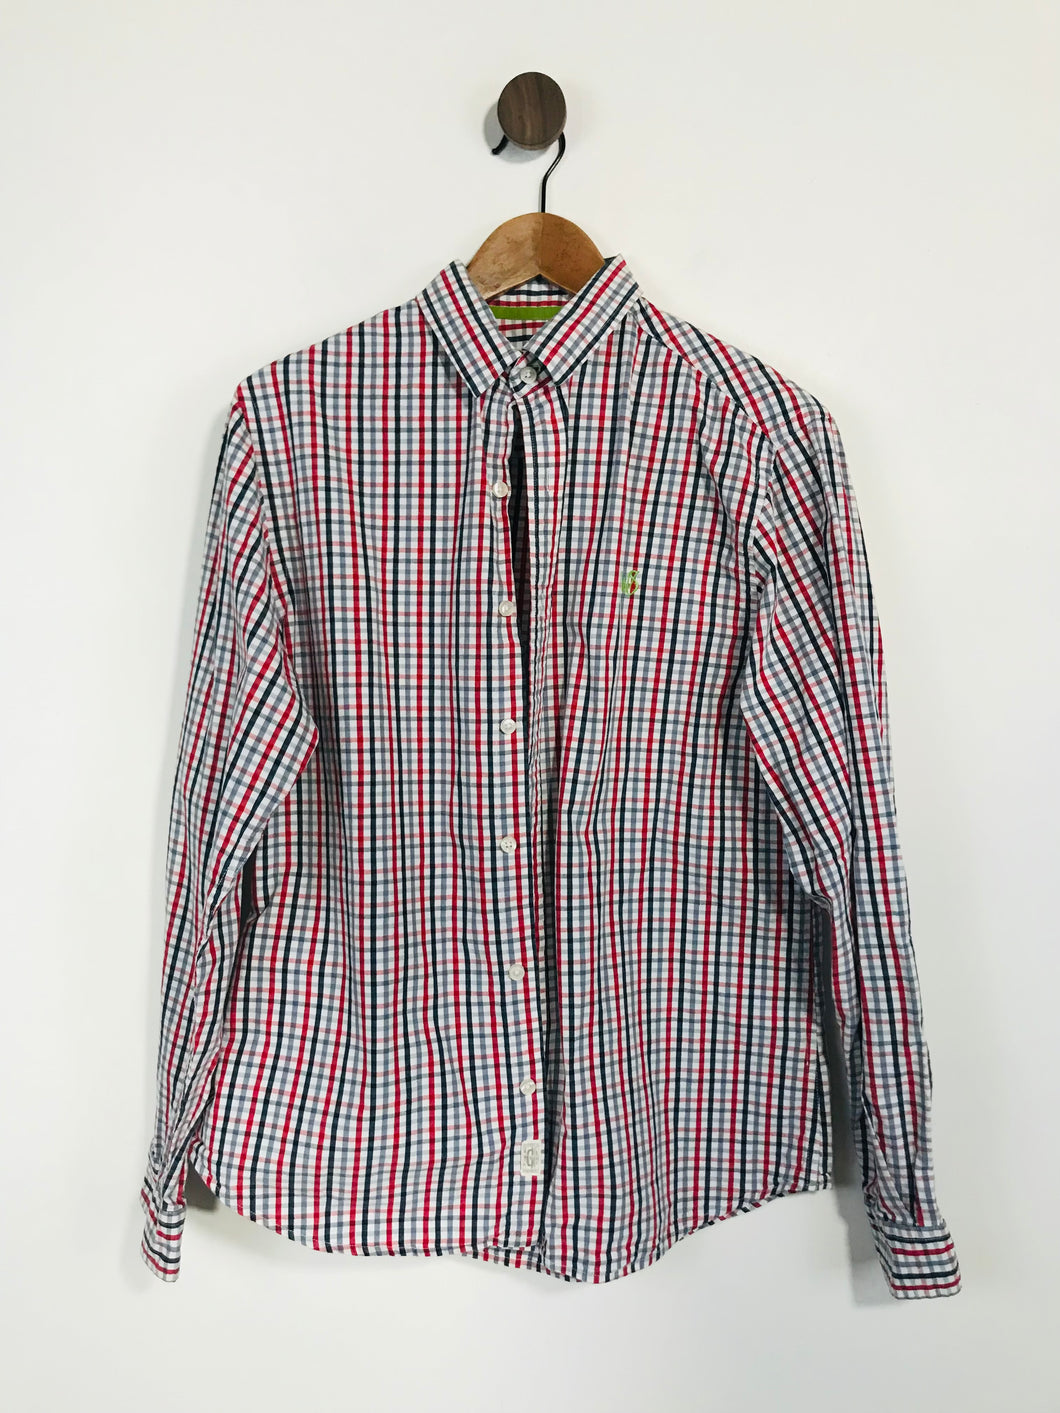 White Stuff Men's Check Striped Button-Up Shirt | M | Multicolour